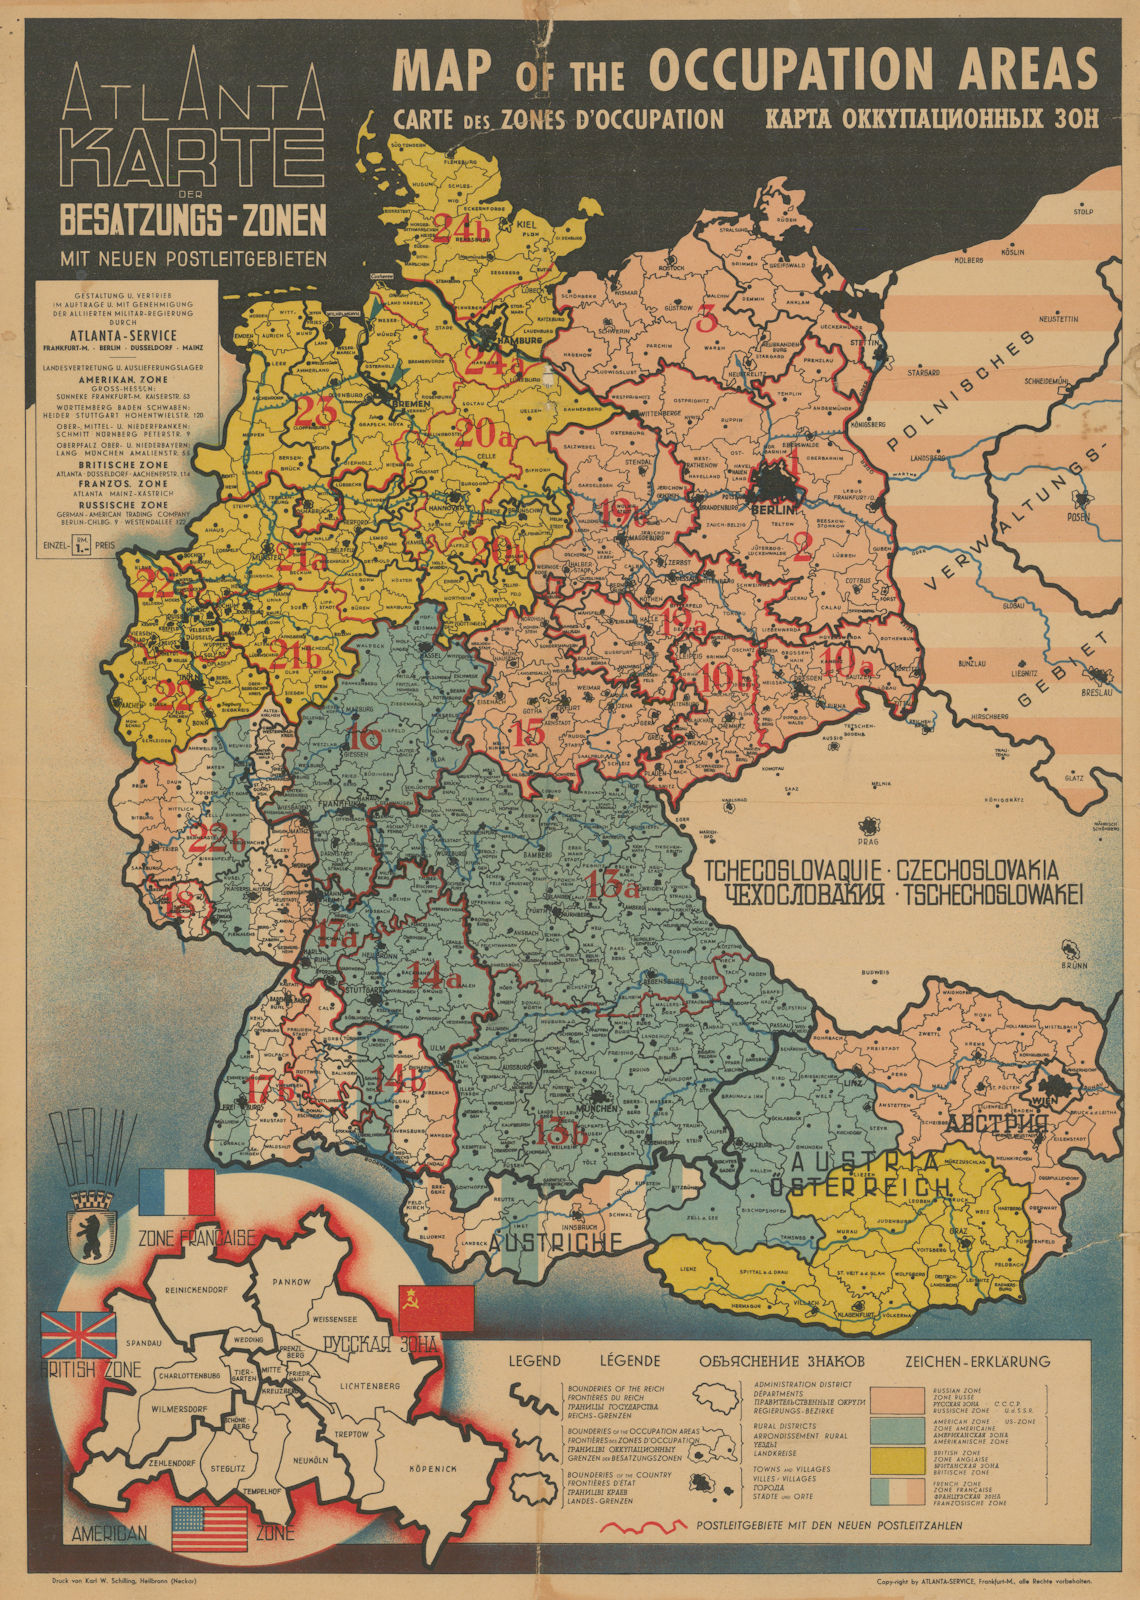 Atlanta Karte der Besatzungs-Zonen. Map of the Occupation Areas of Germany 1946